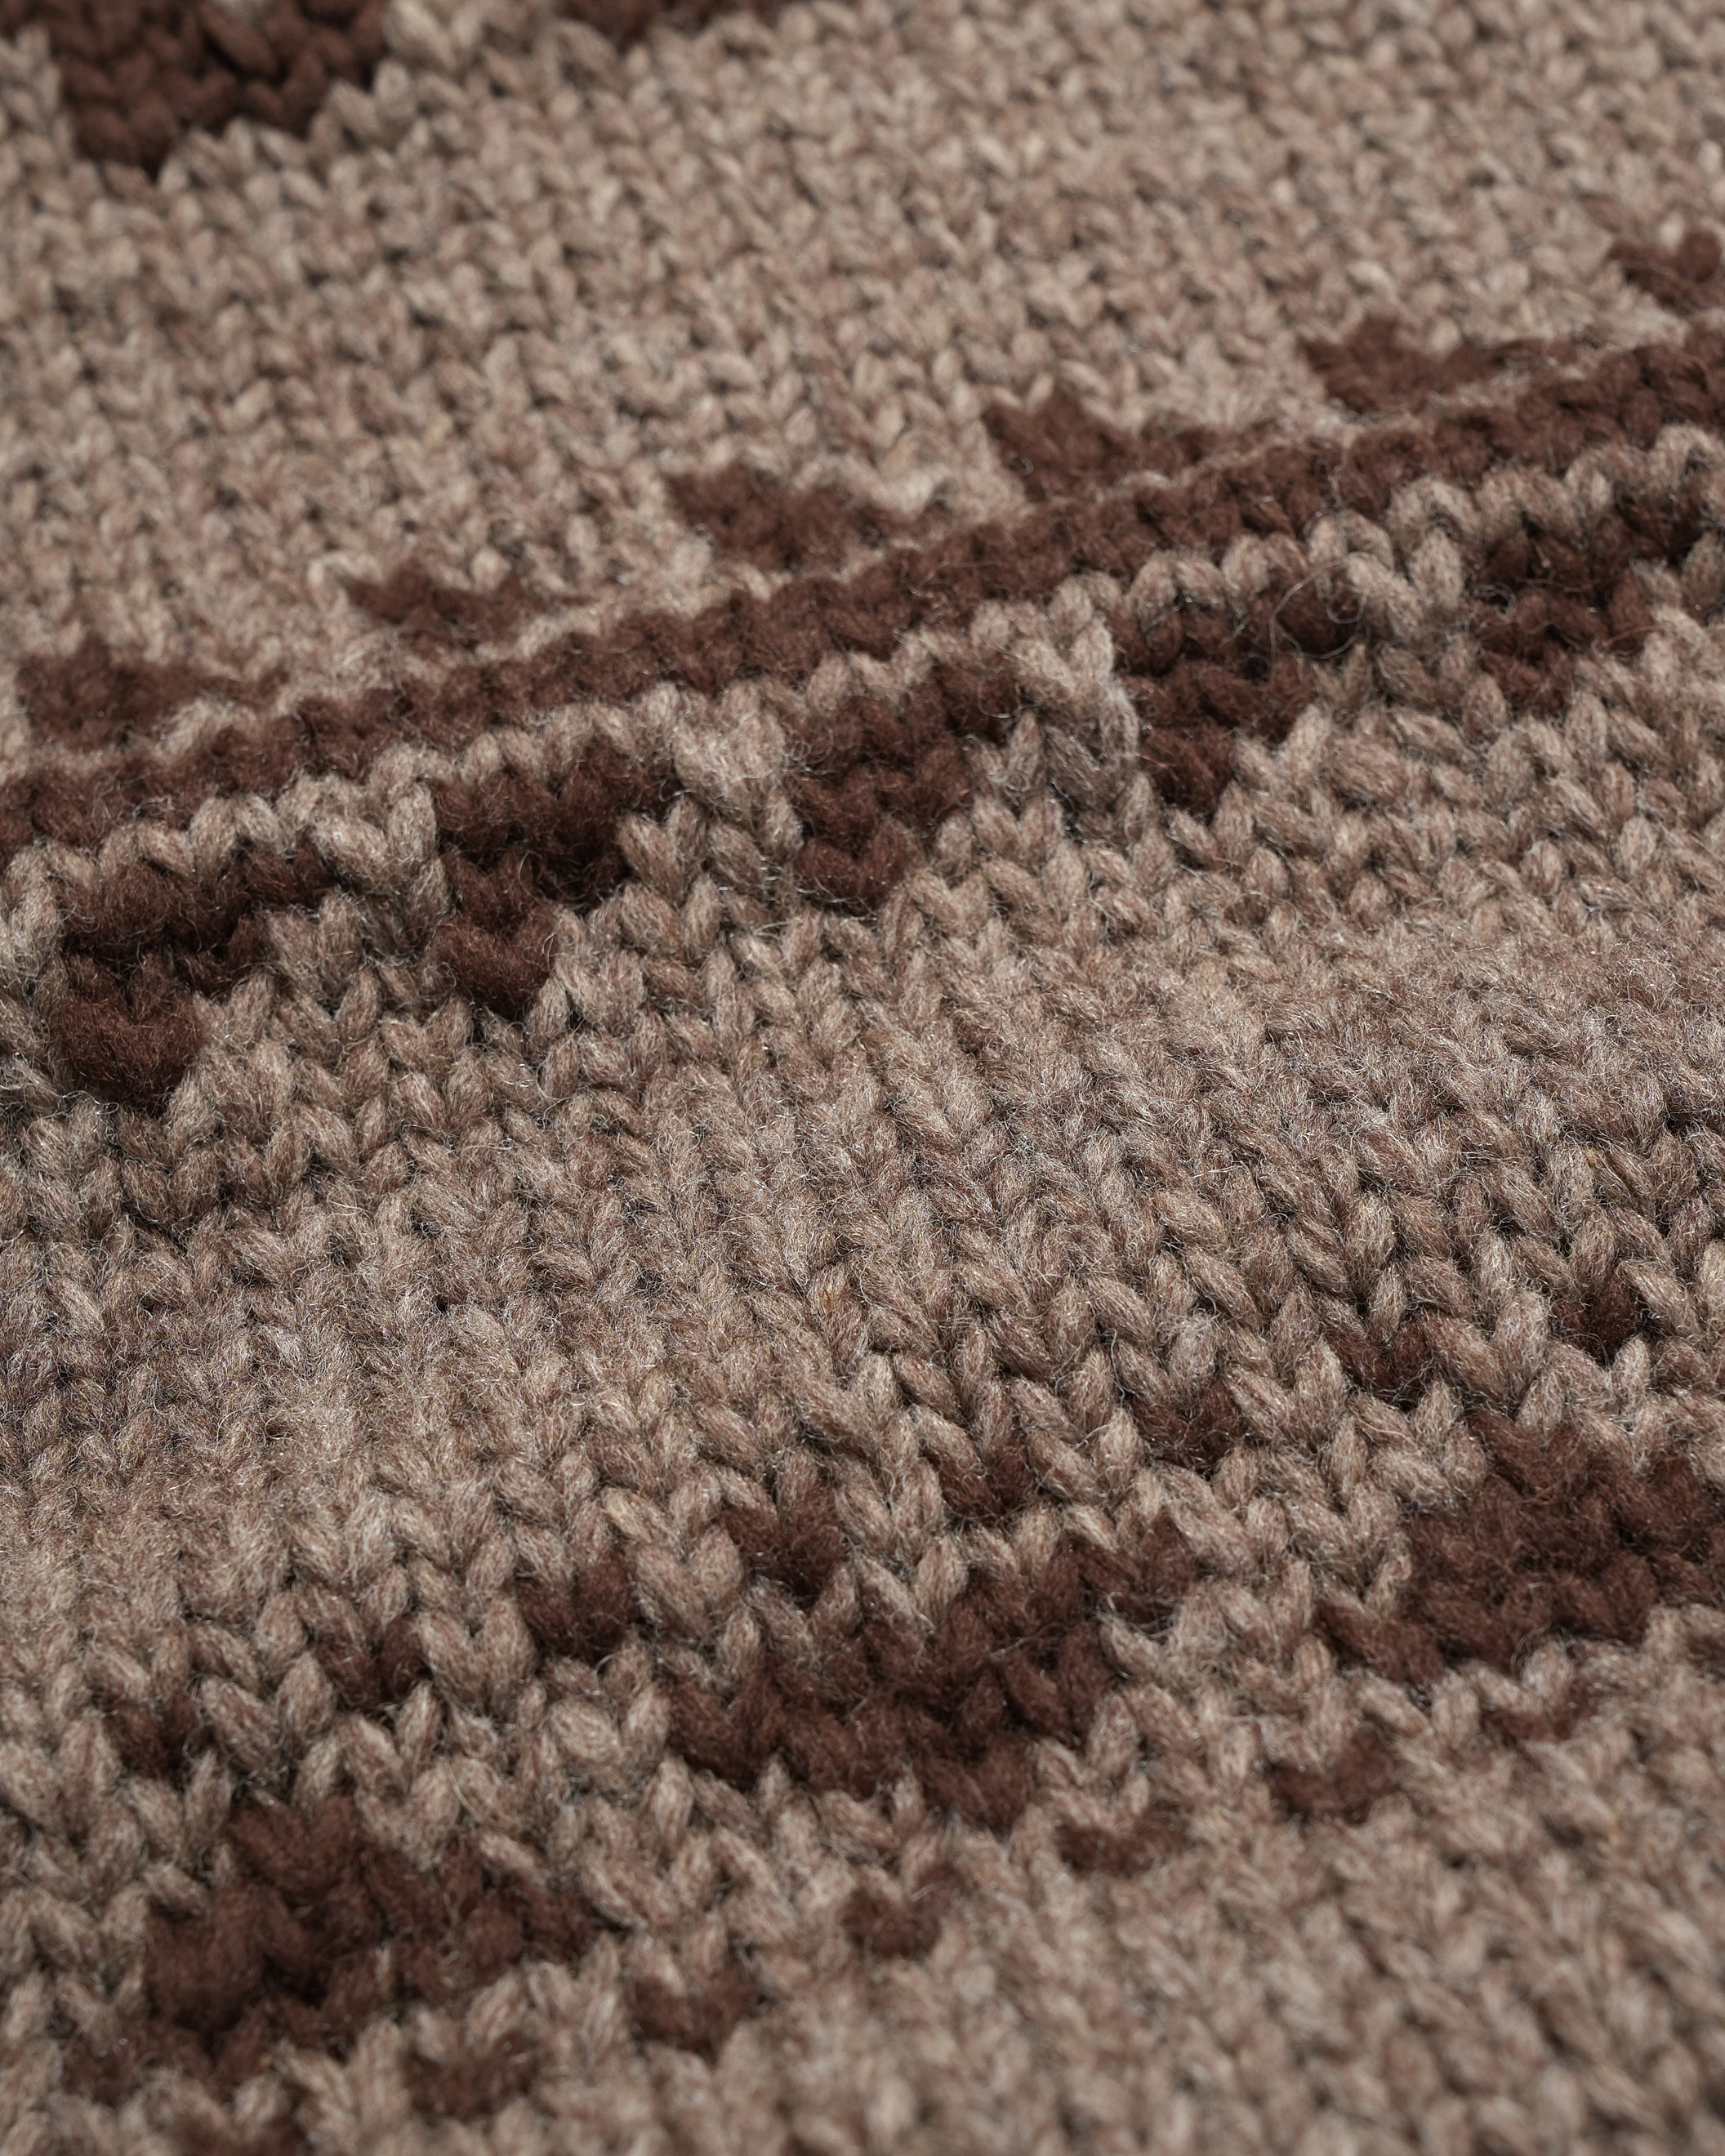 Cowichan Sweater - Beige/Brown